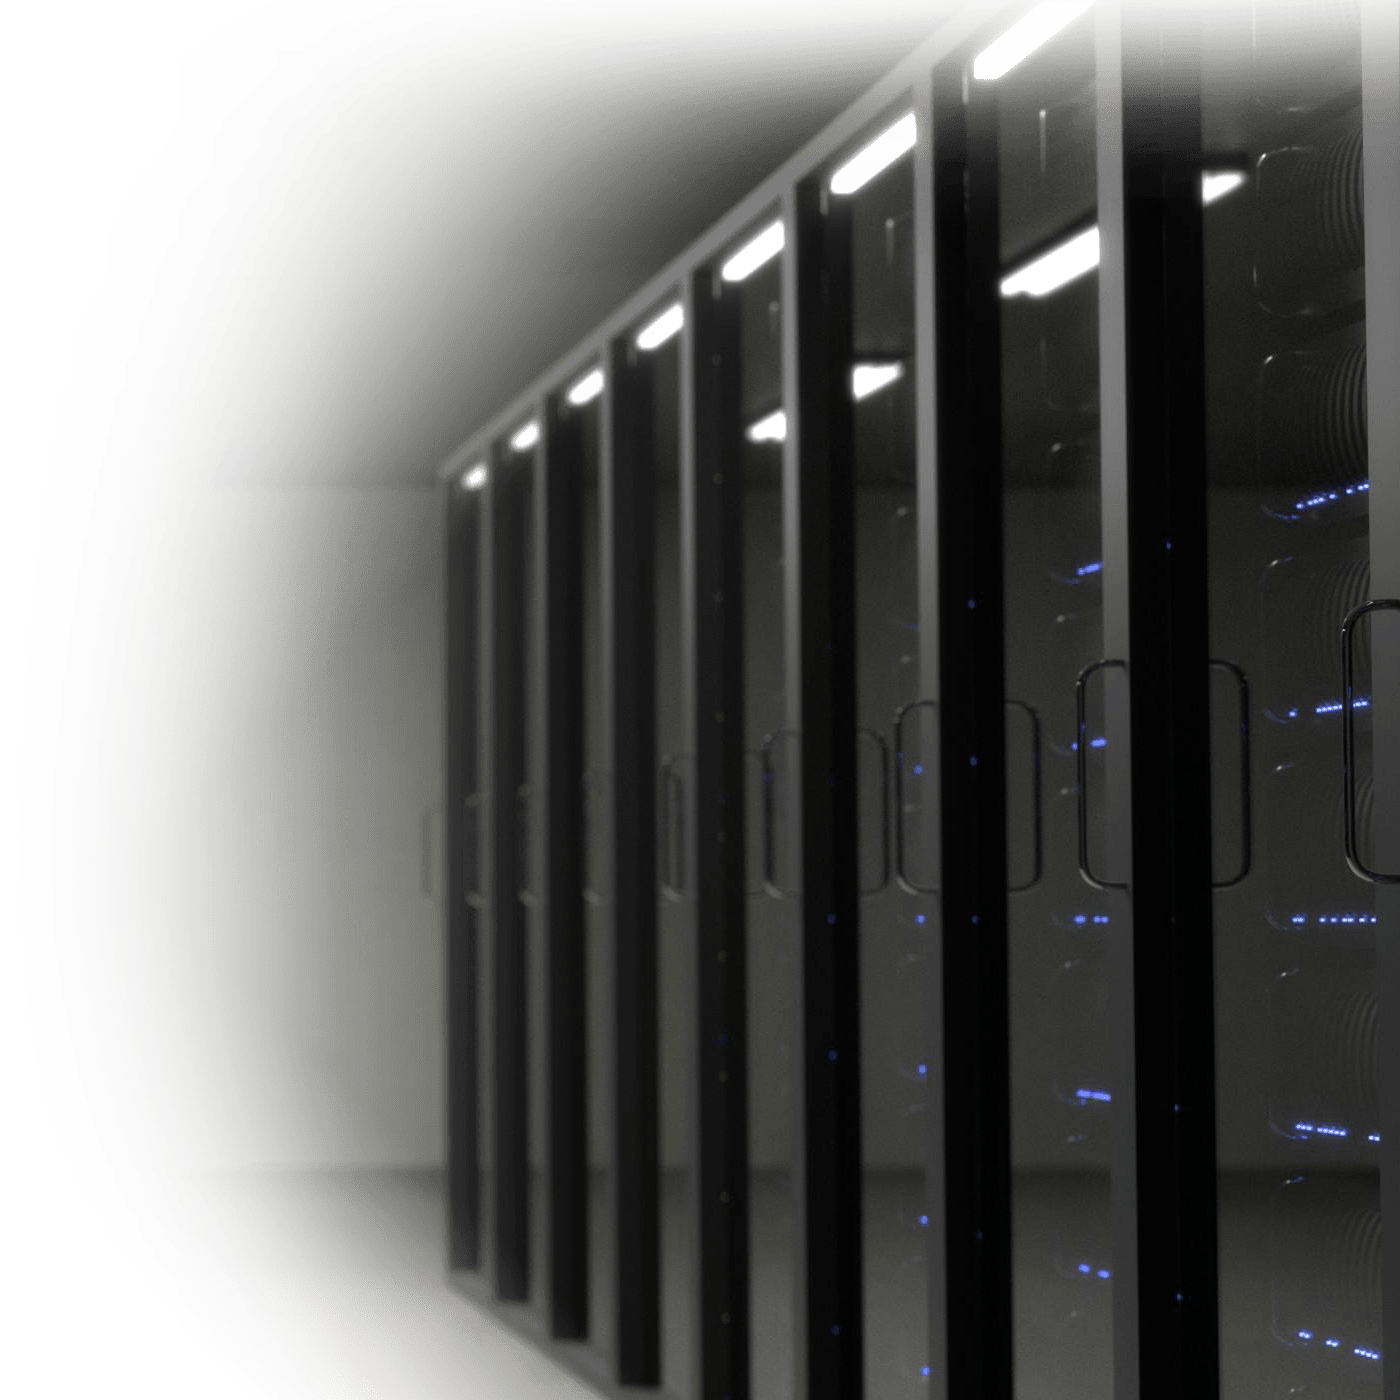 Cloud platform that serves as a secured e-Vault